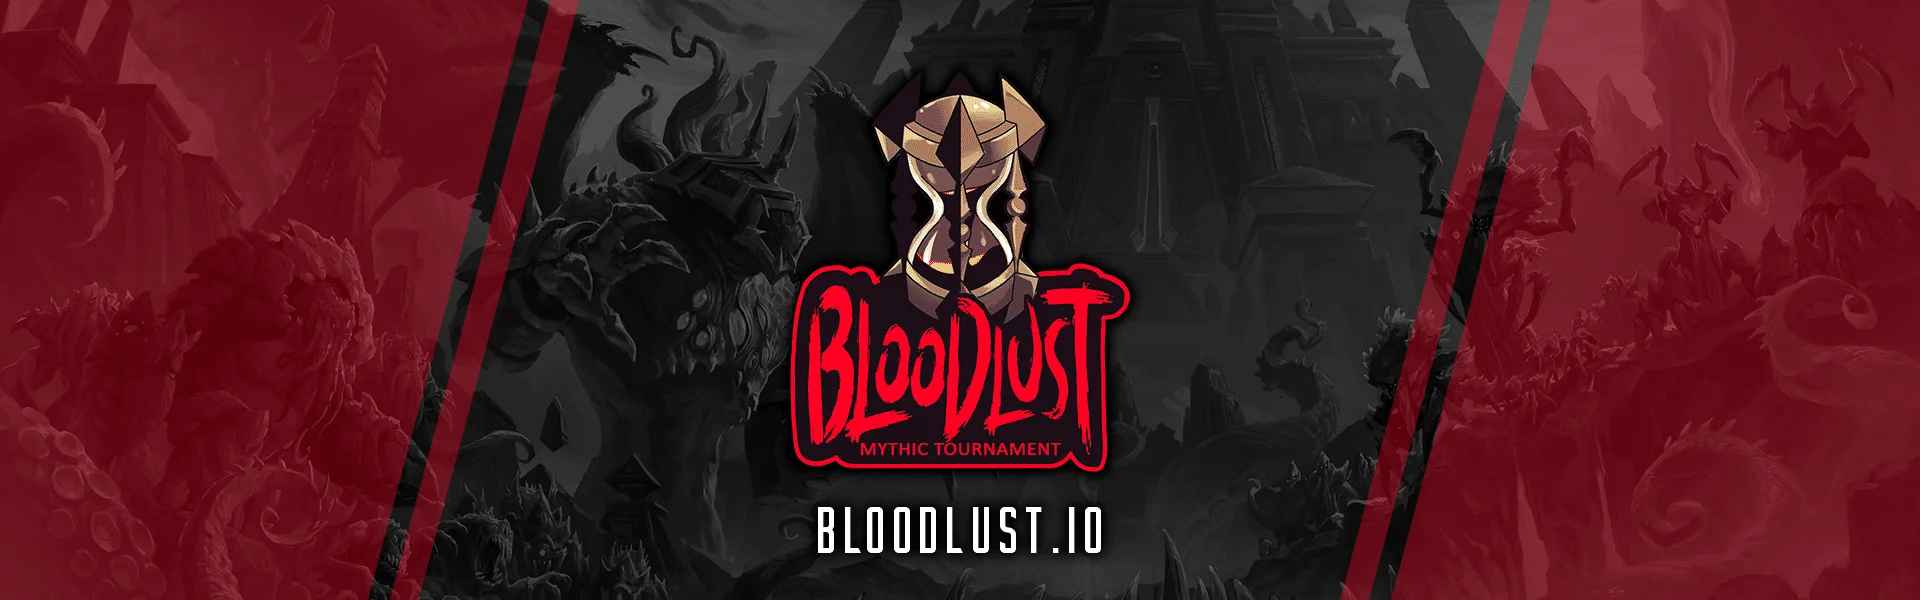 Llega la final del Bloodlust Mythic Tournament